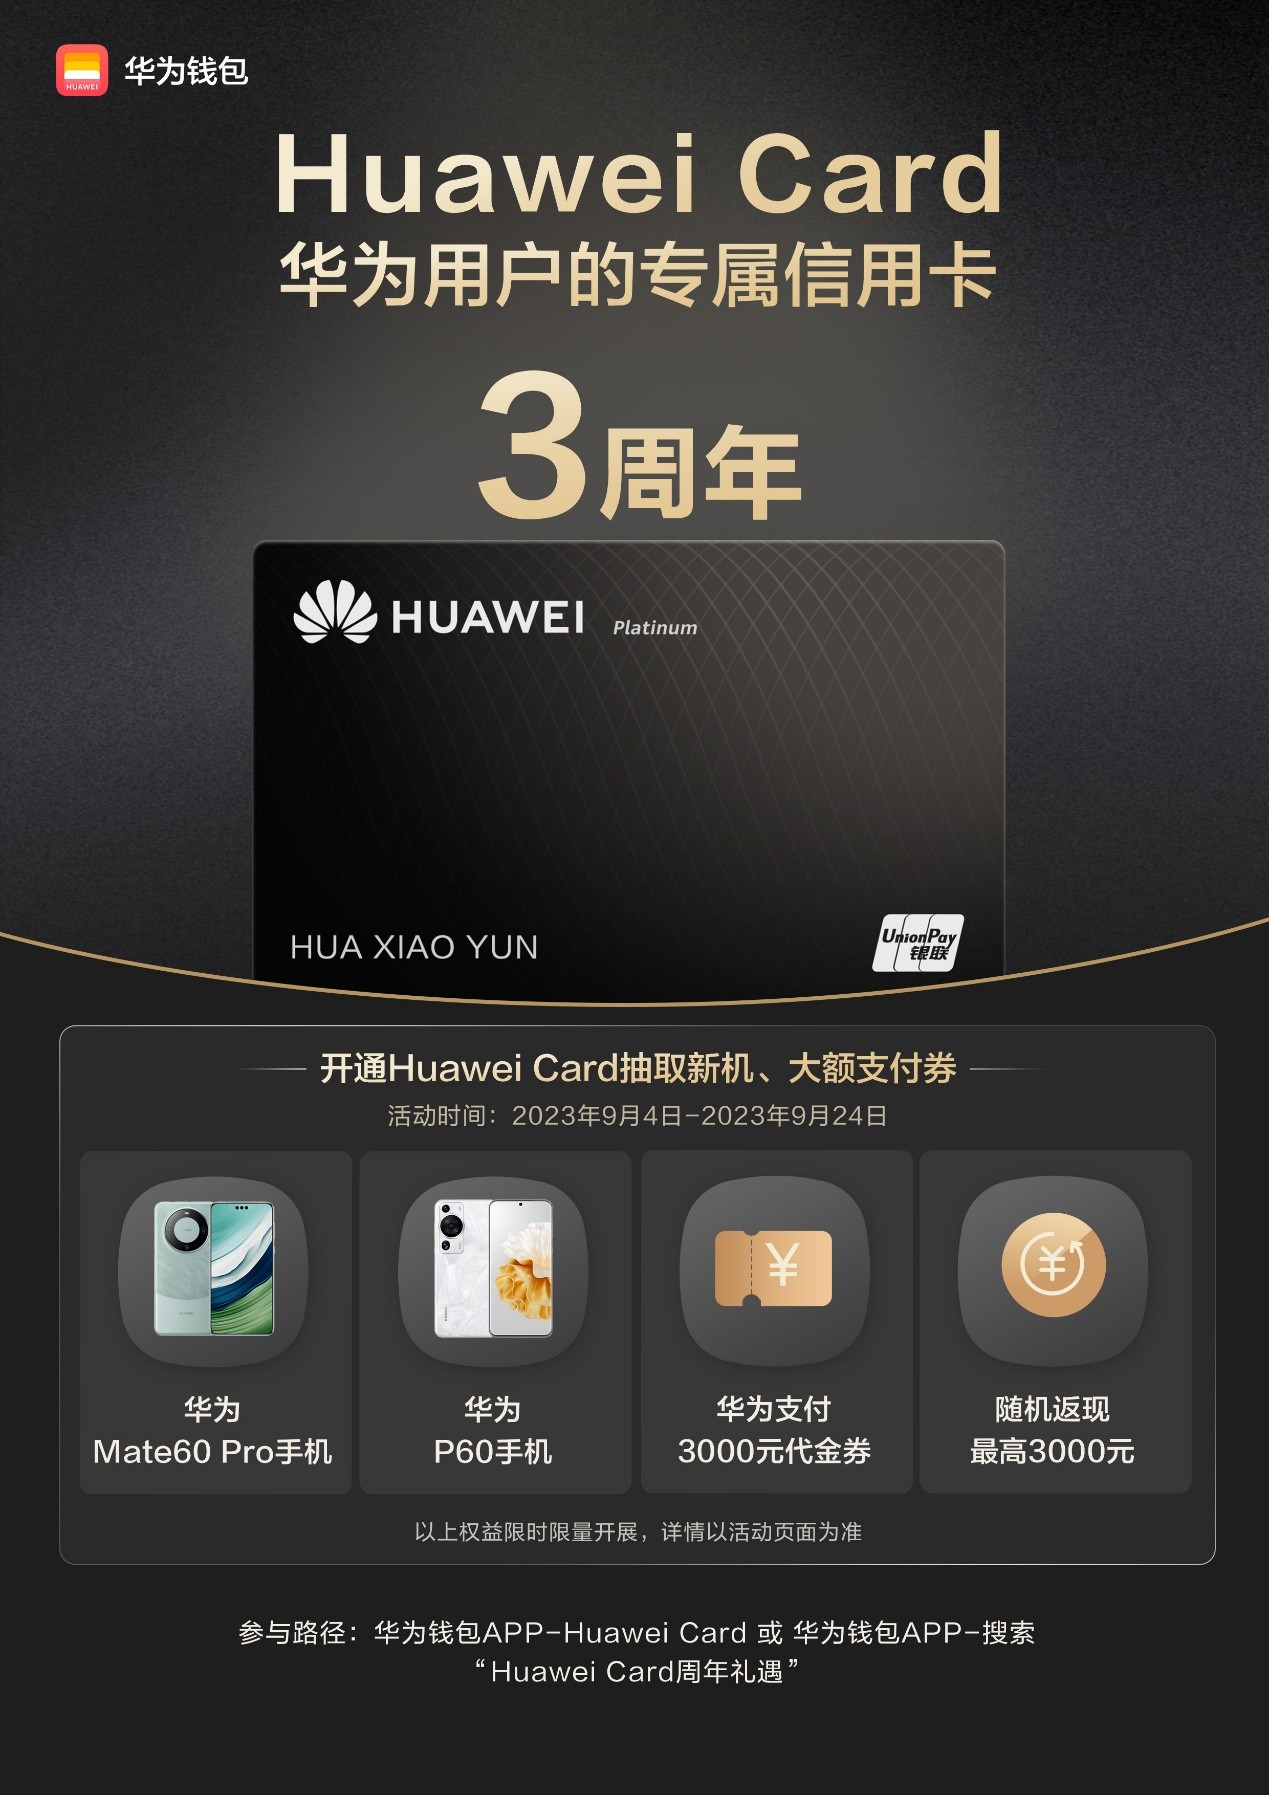 Huawei Card上线三年，携礼（华为Mate60 Pro、3000元支付金）回馈用户